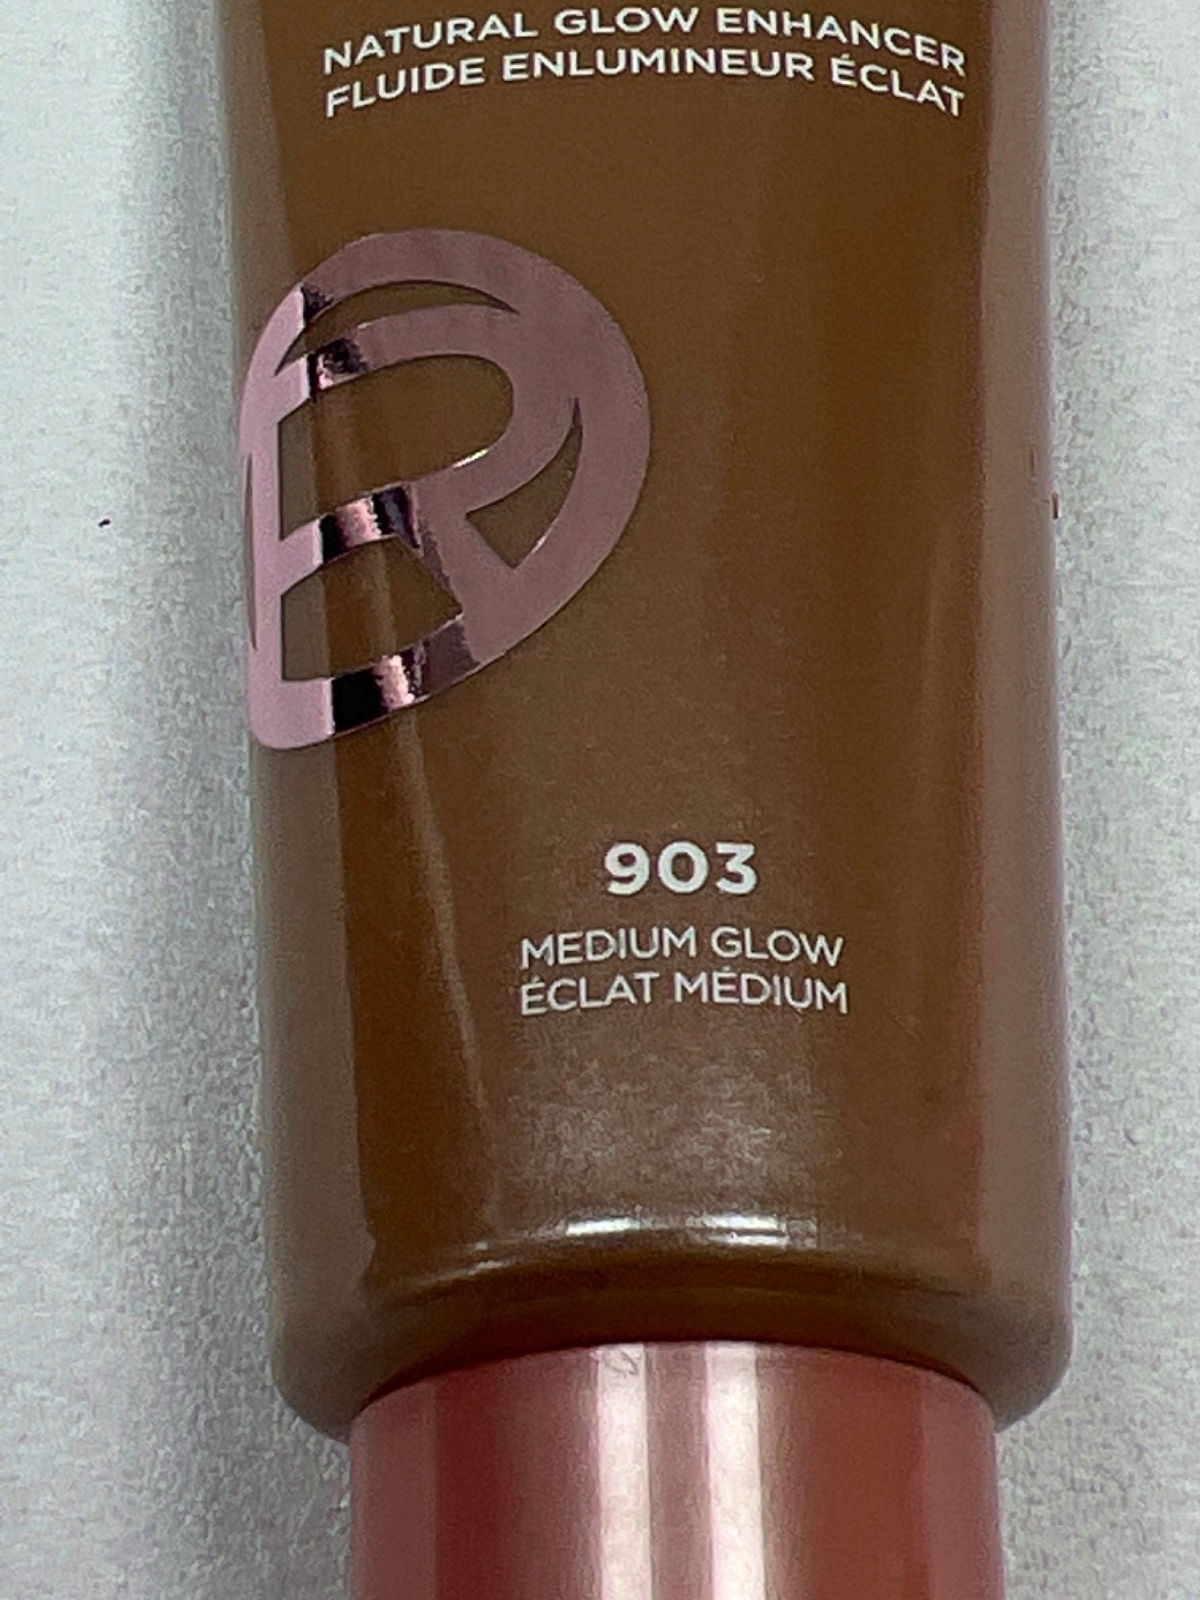 L'Oréal Paris Glotion Natural Glow Enhancer 903 Medium Glow 40ml